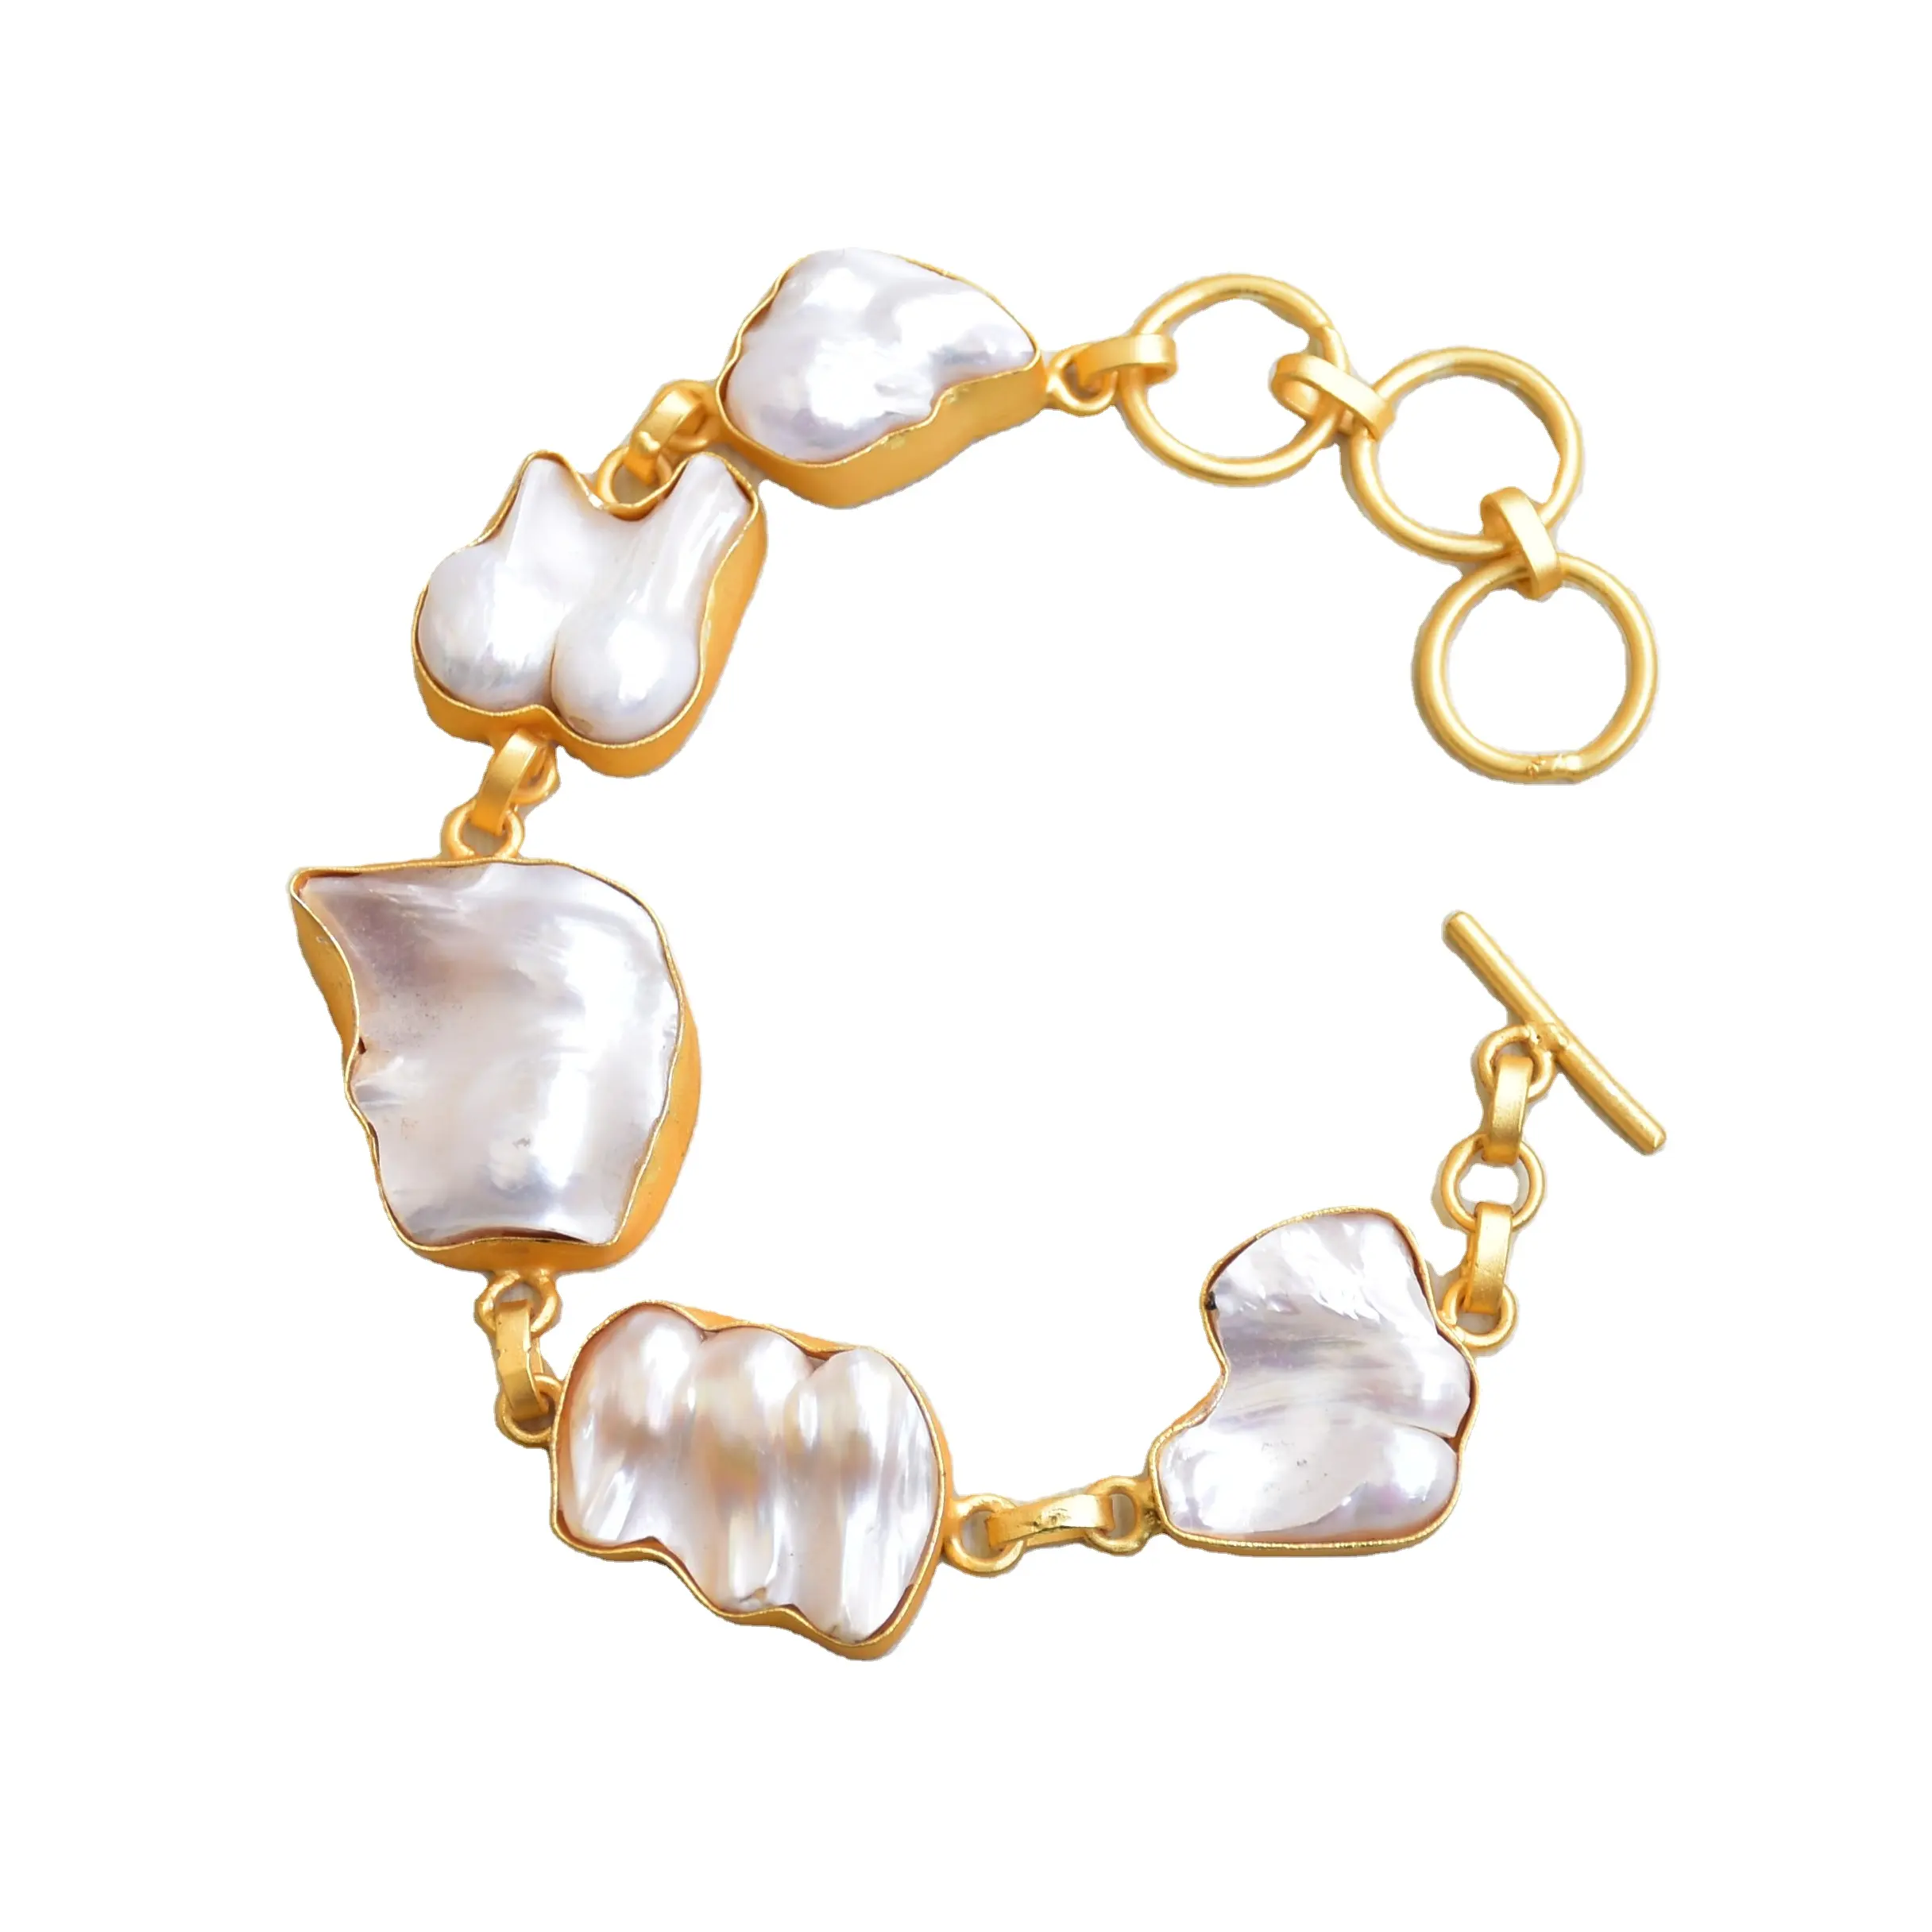 Pearl elegant bracelet adjustable chain lock baroque bracelets and charms handmade bridal bangles Suppliers